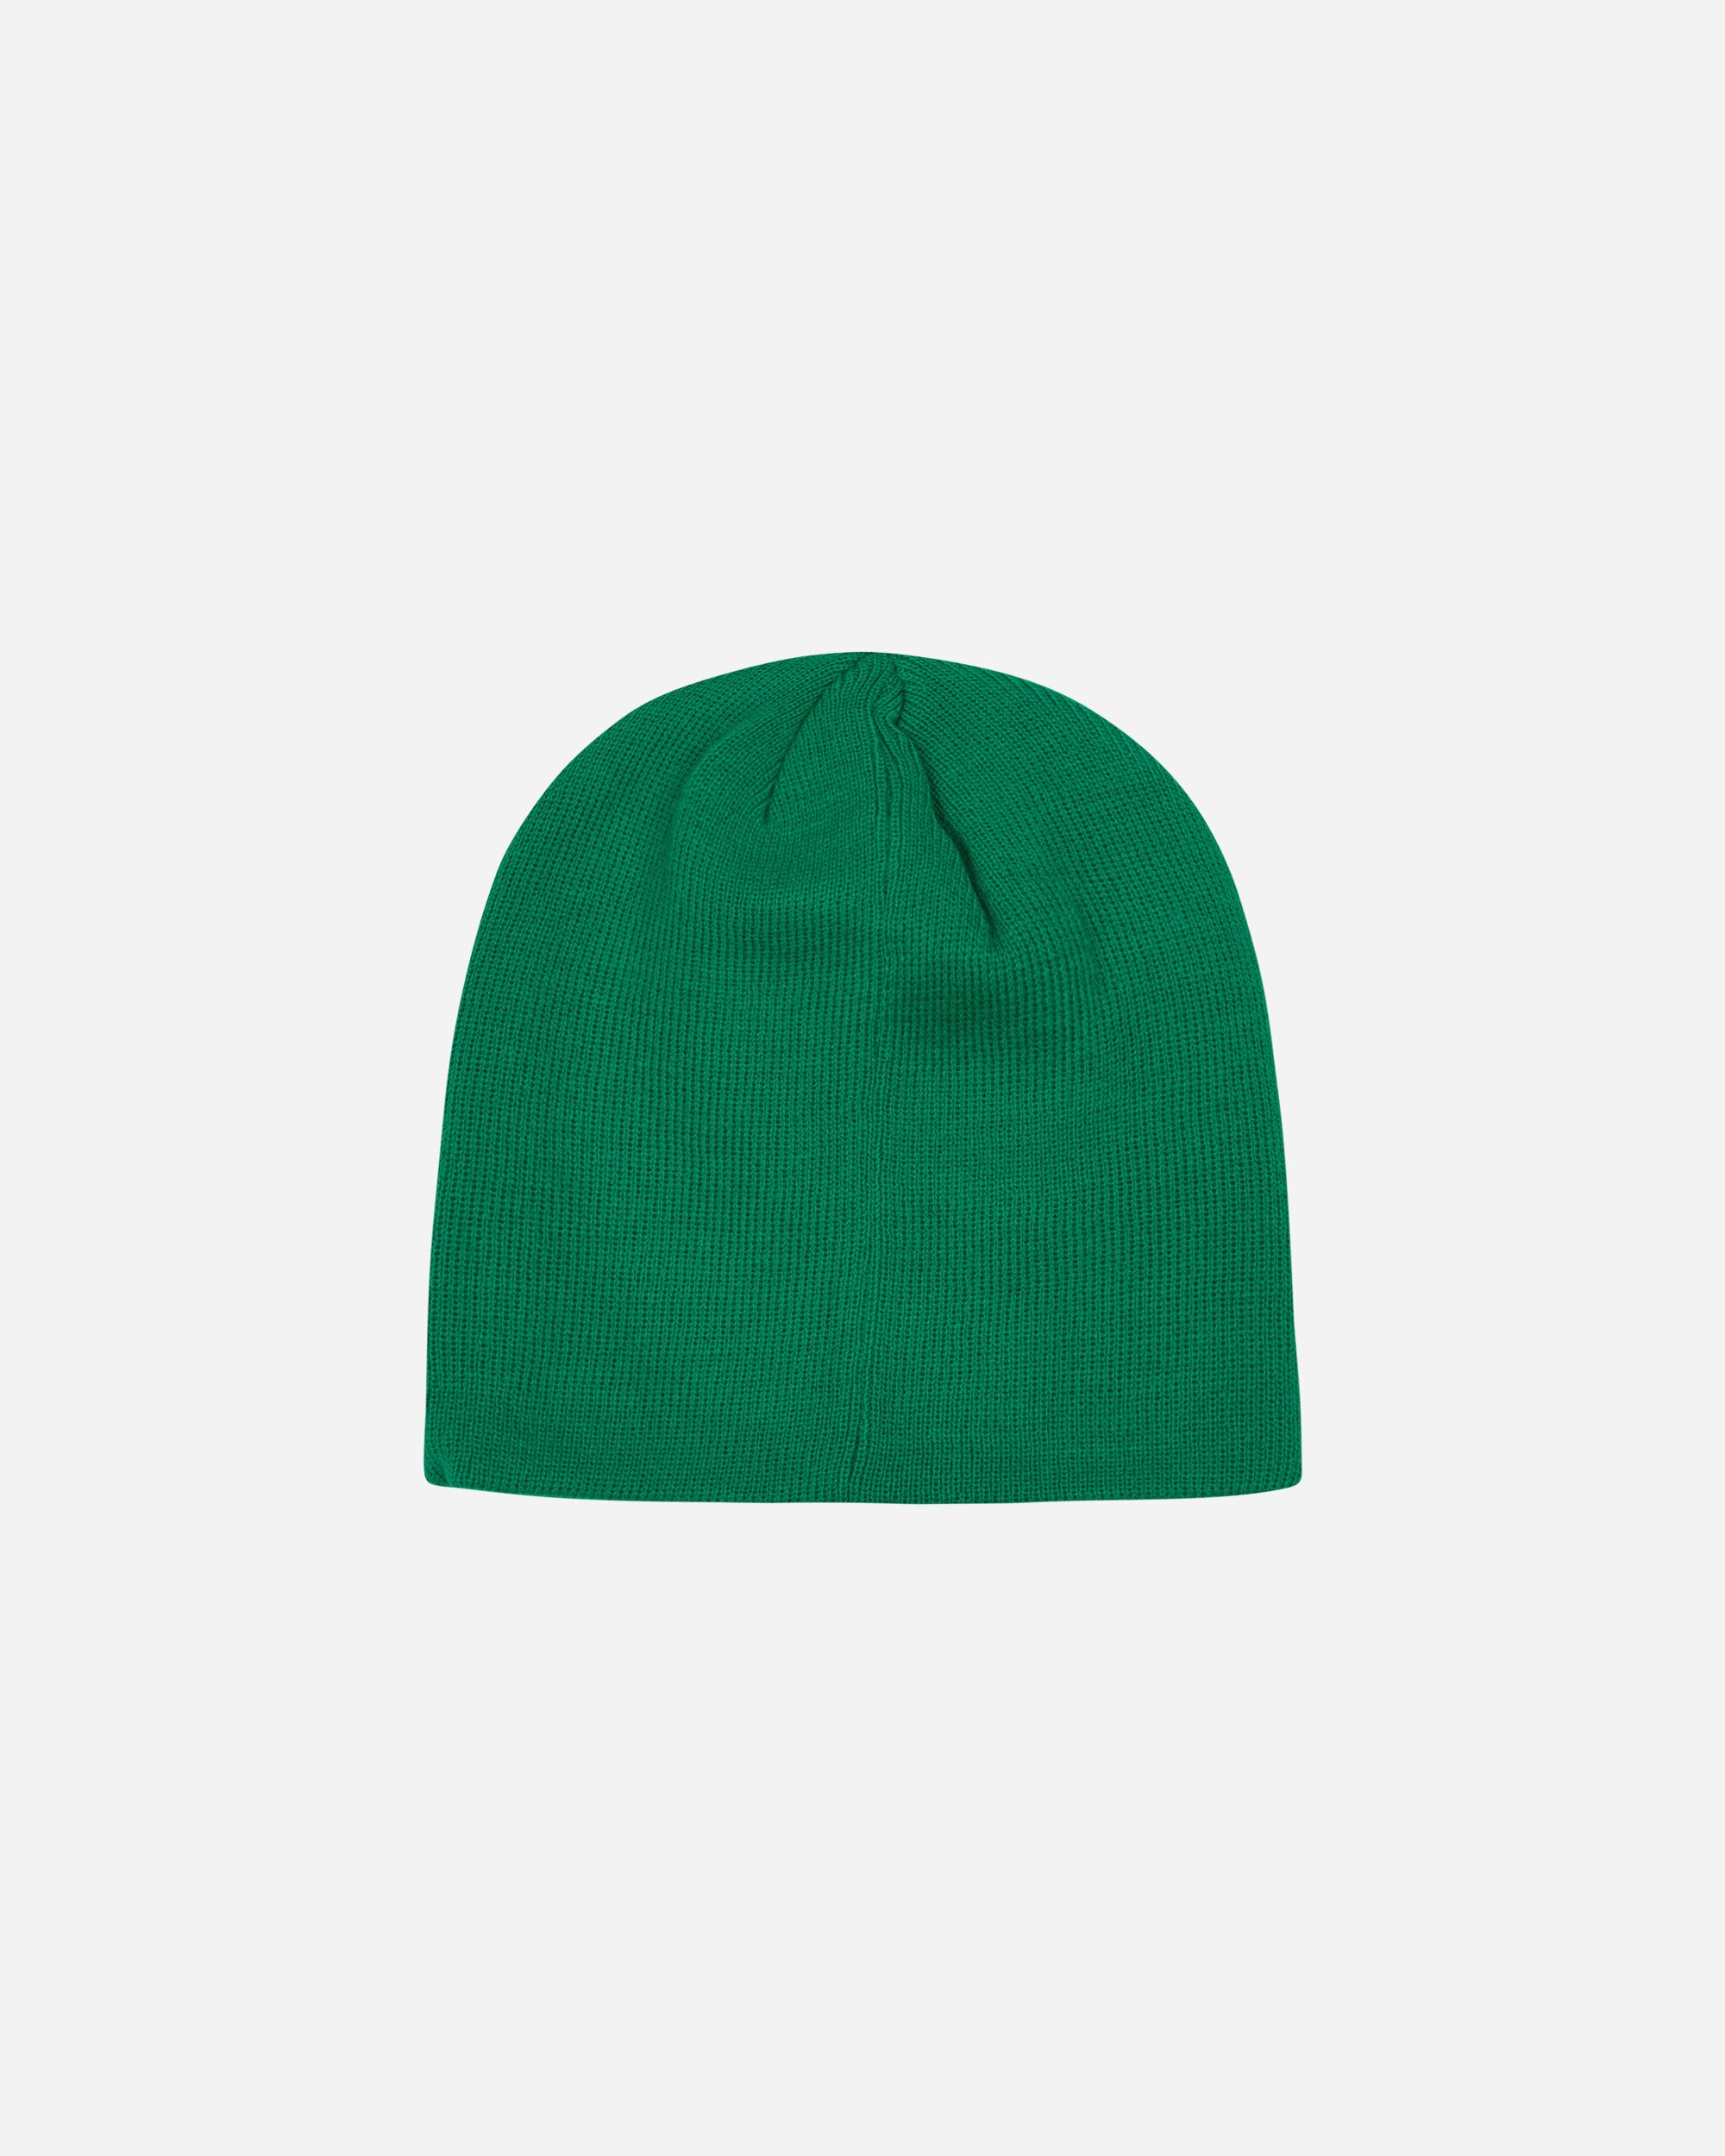 Stüssy Burly Threads Skullcap Beanie Green Hats Beanies 1321206 0401